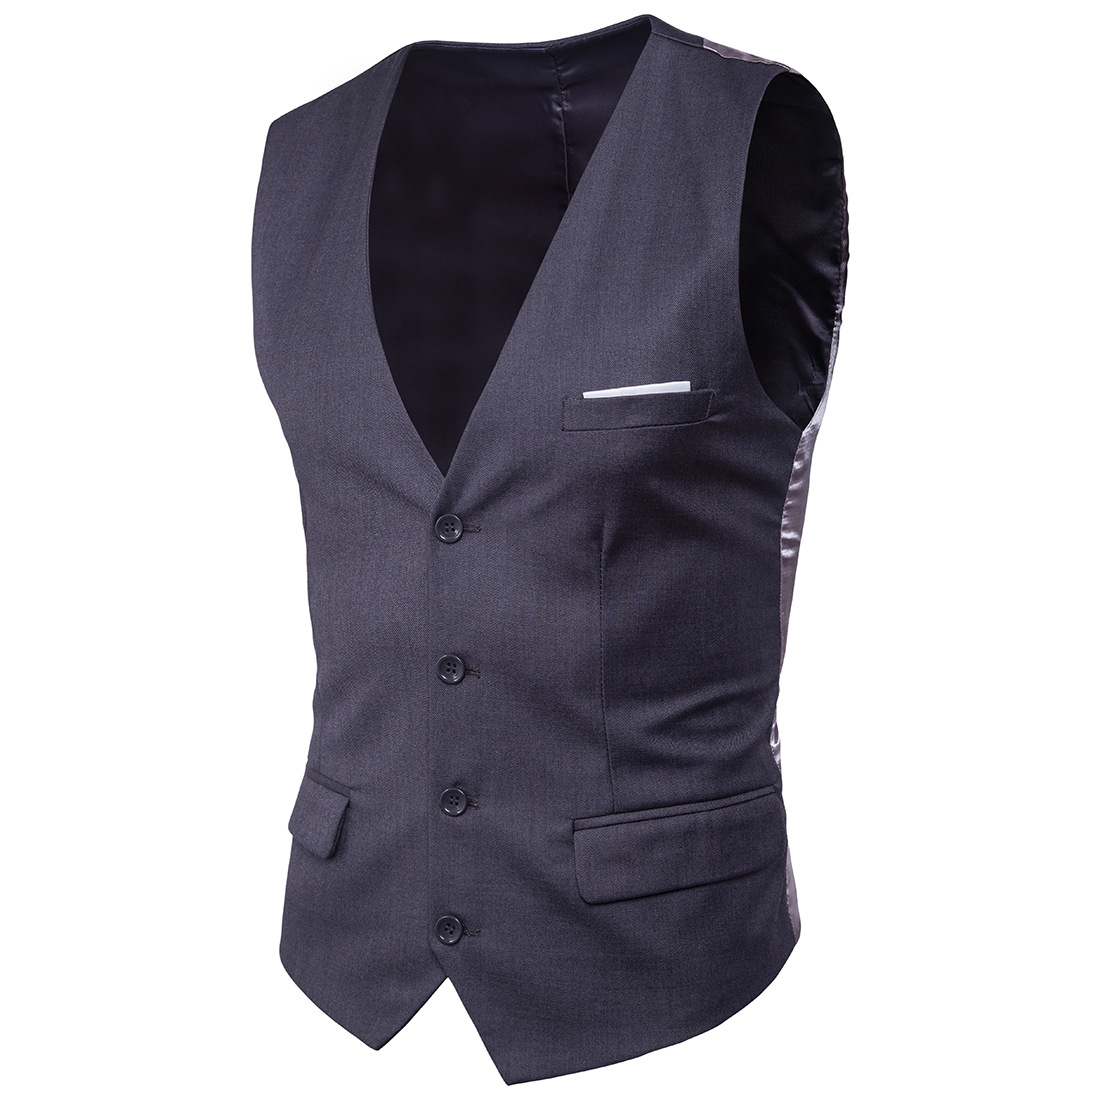  Men Suit Waistcoat Single Breasted Vest Jacket Casual Business Slim Fit Sleeveless Coat dark gray